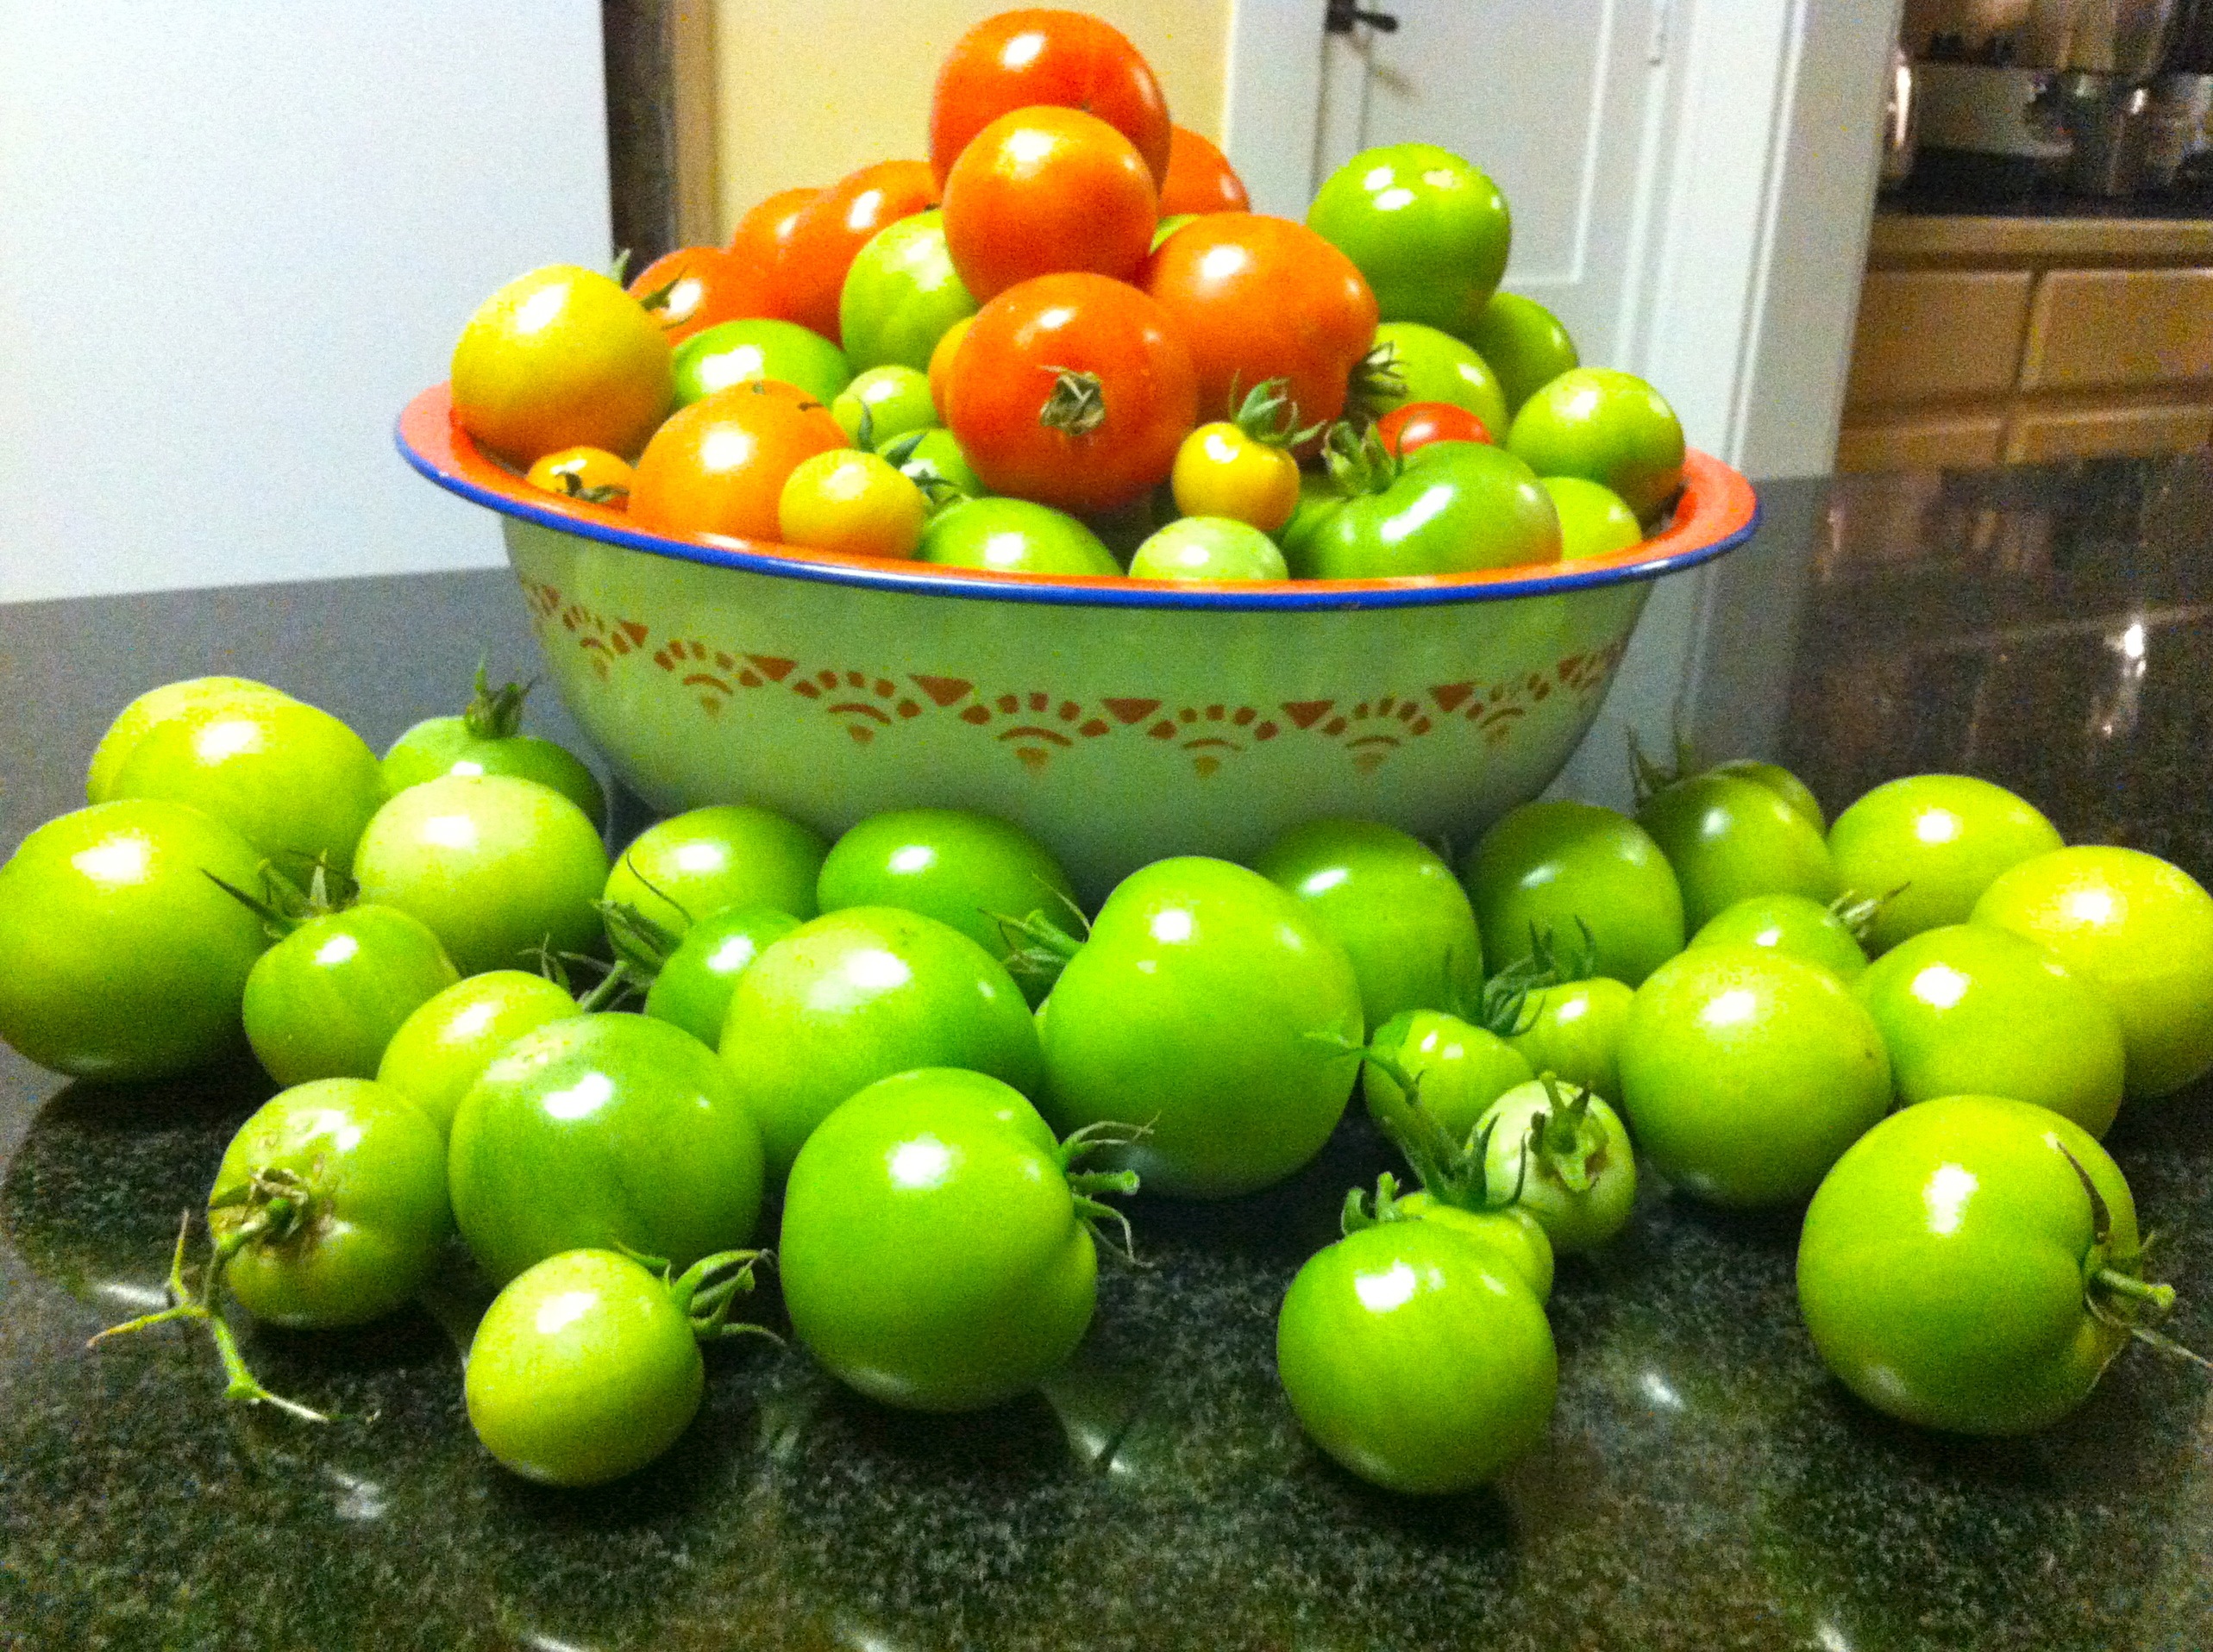 Organic gardening expert chef and health expert, Nancy Addison's organic tomatoes she grew in her garden.